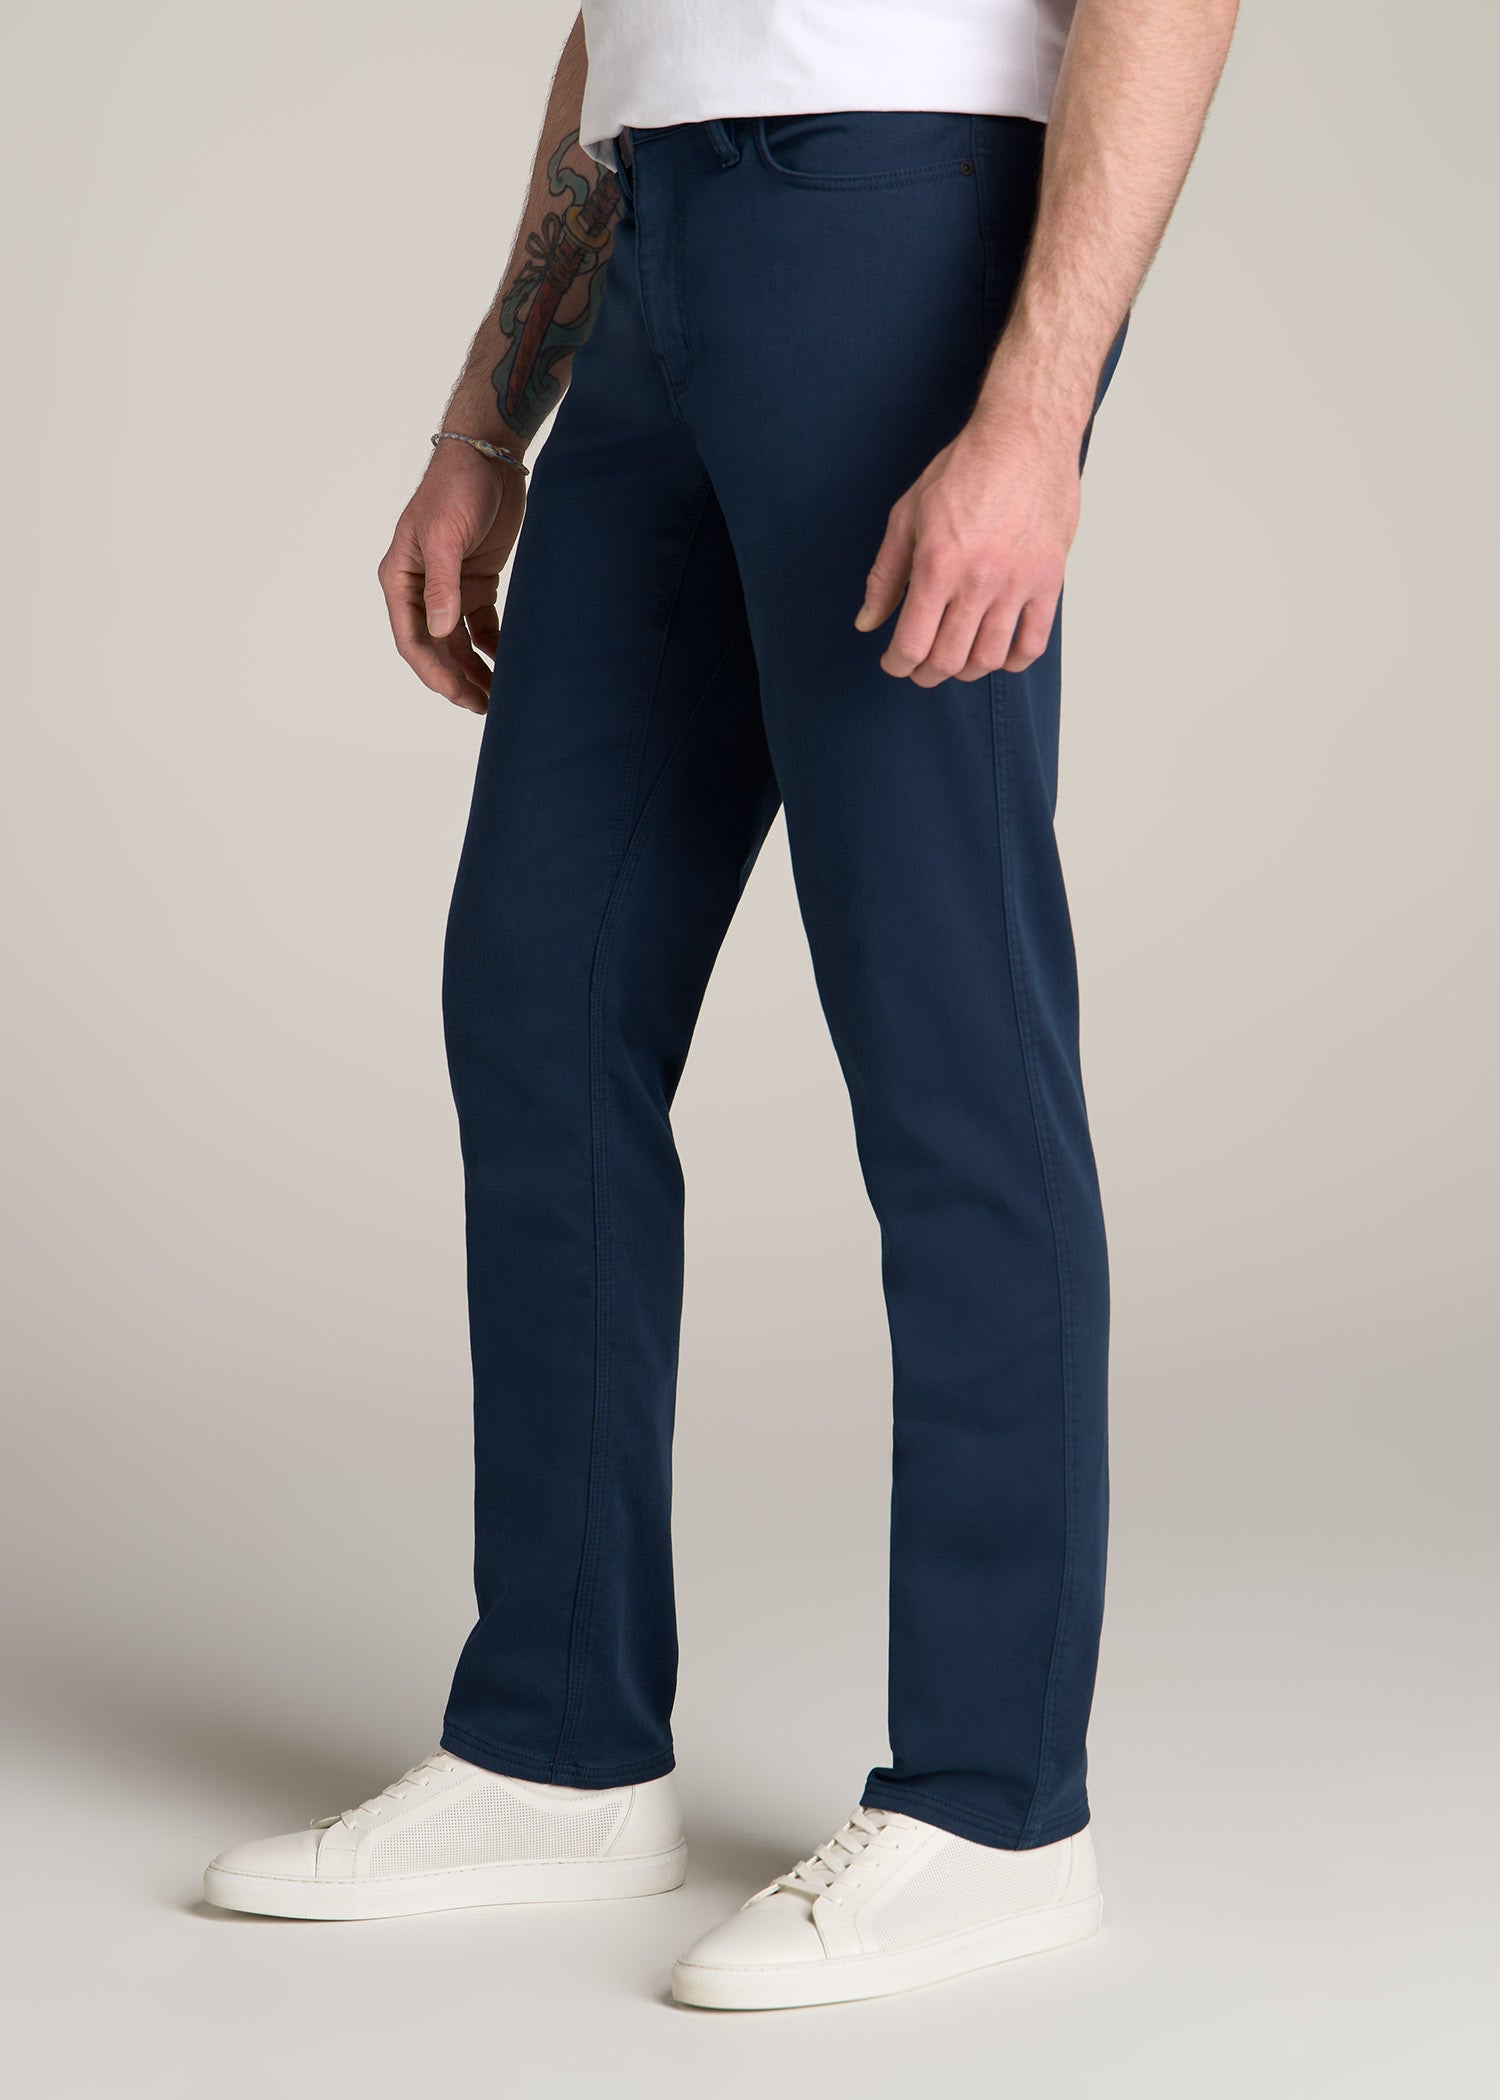 American-Tall-Men-Everyday-Comfort-Five-Pocket-Pant-Marine-Navy-side